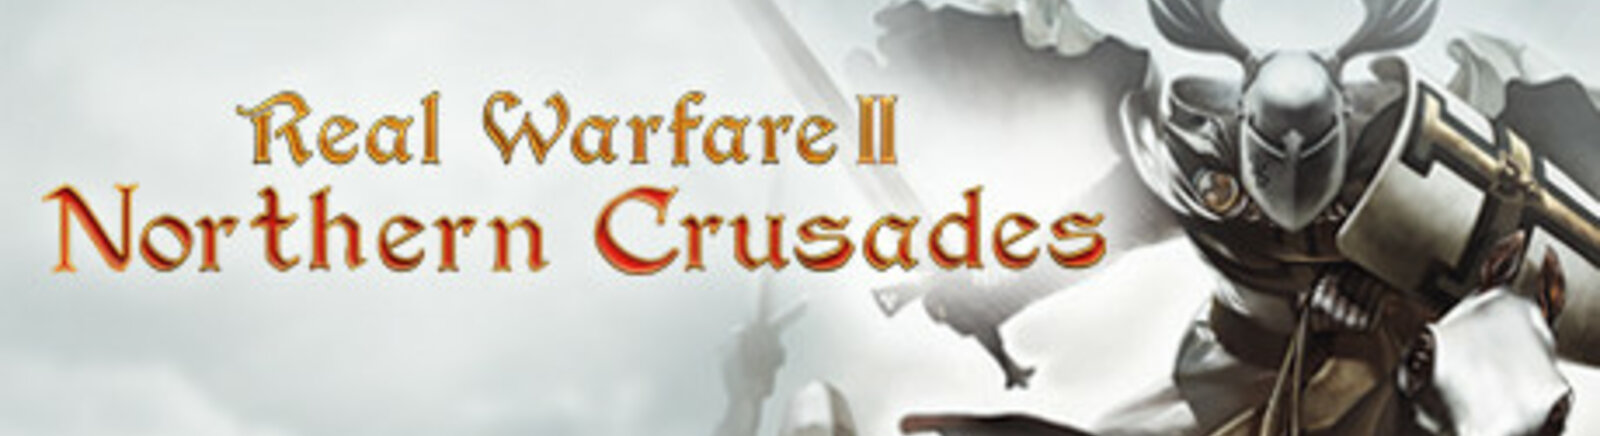 Дата выхода Real Warfare 2: Northern Crusades (Real Warfare 2)  на PC в России и во всем мире